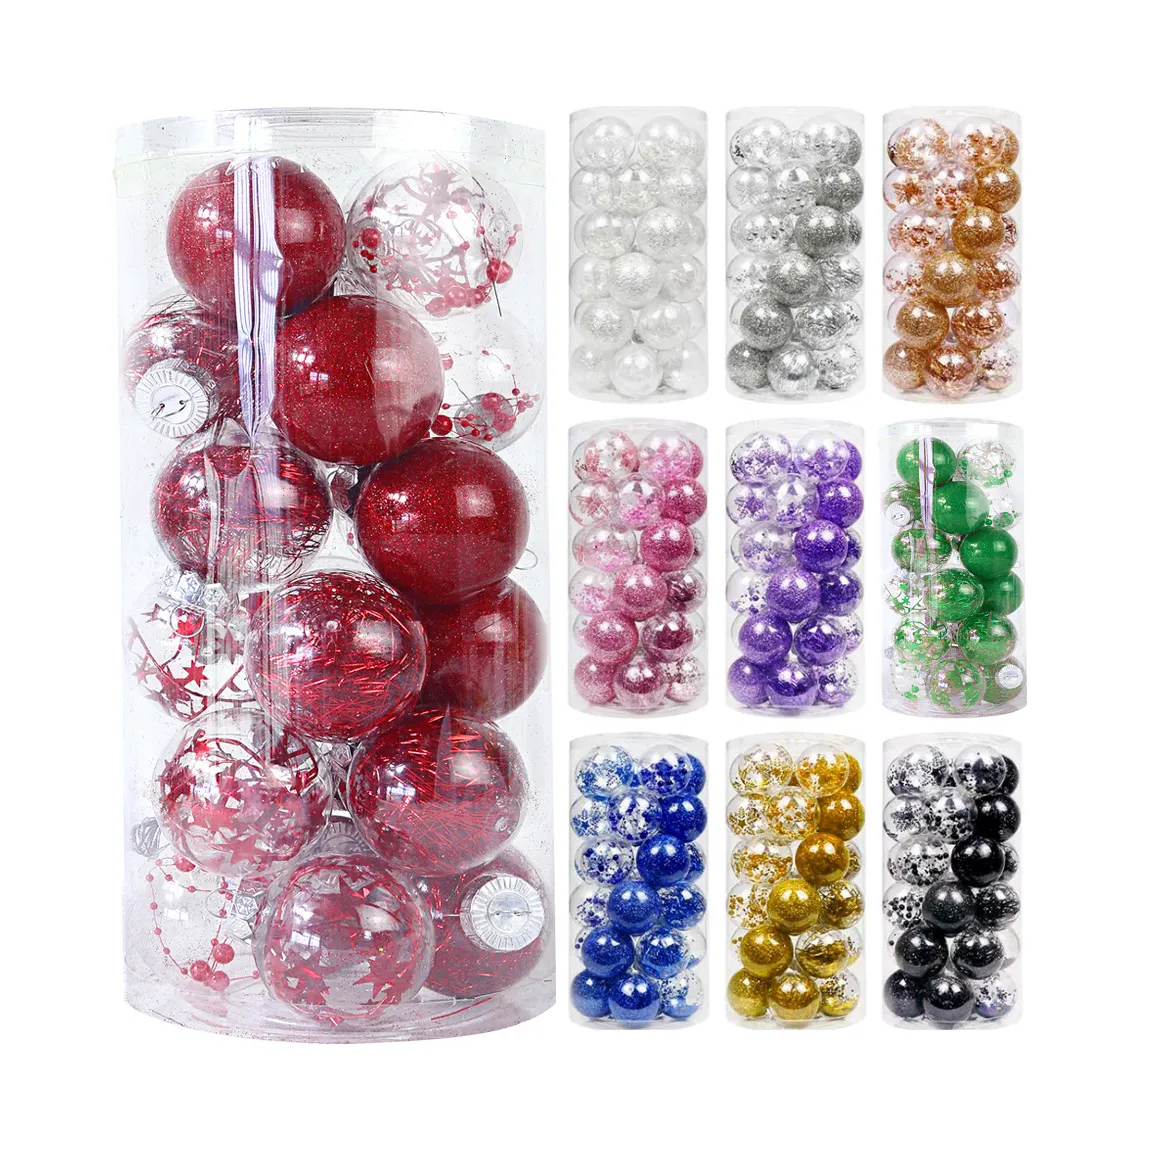 24pcs 60mm baubles enfeites de bolas de plástico transparente de acrílico oco rodada de Natal bola shatterproof